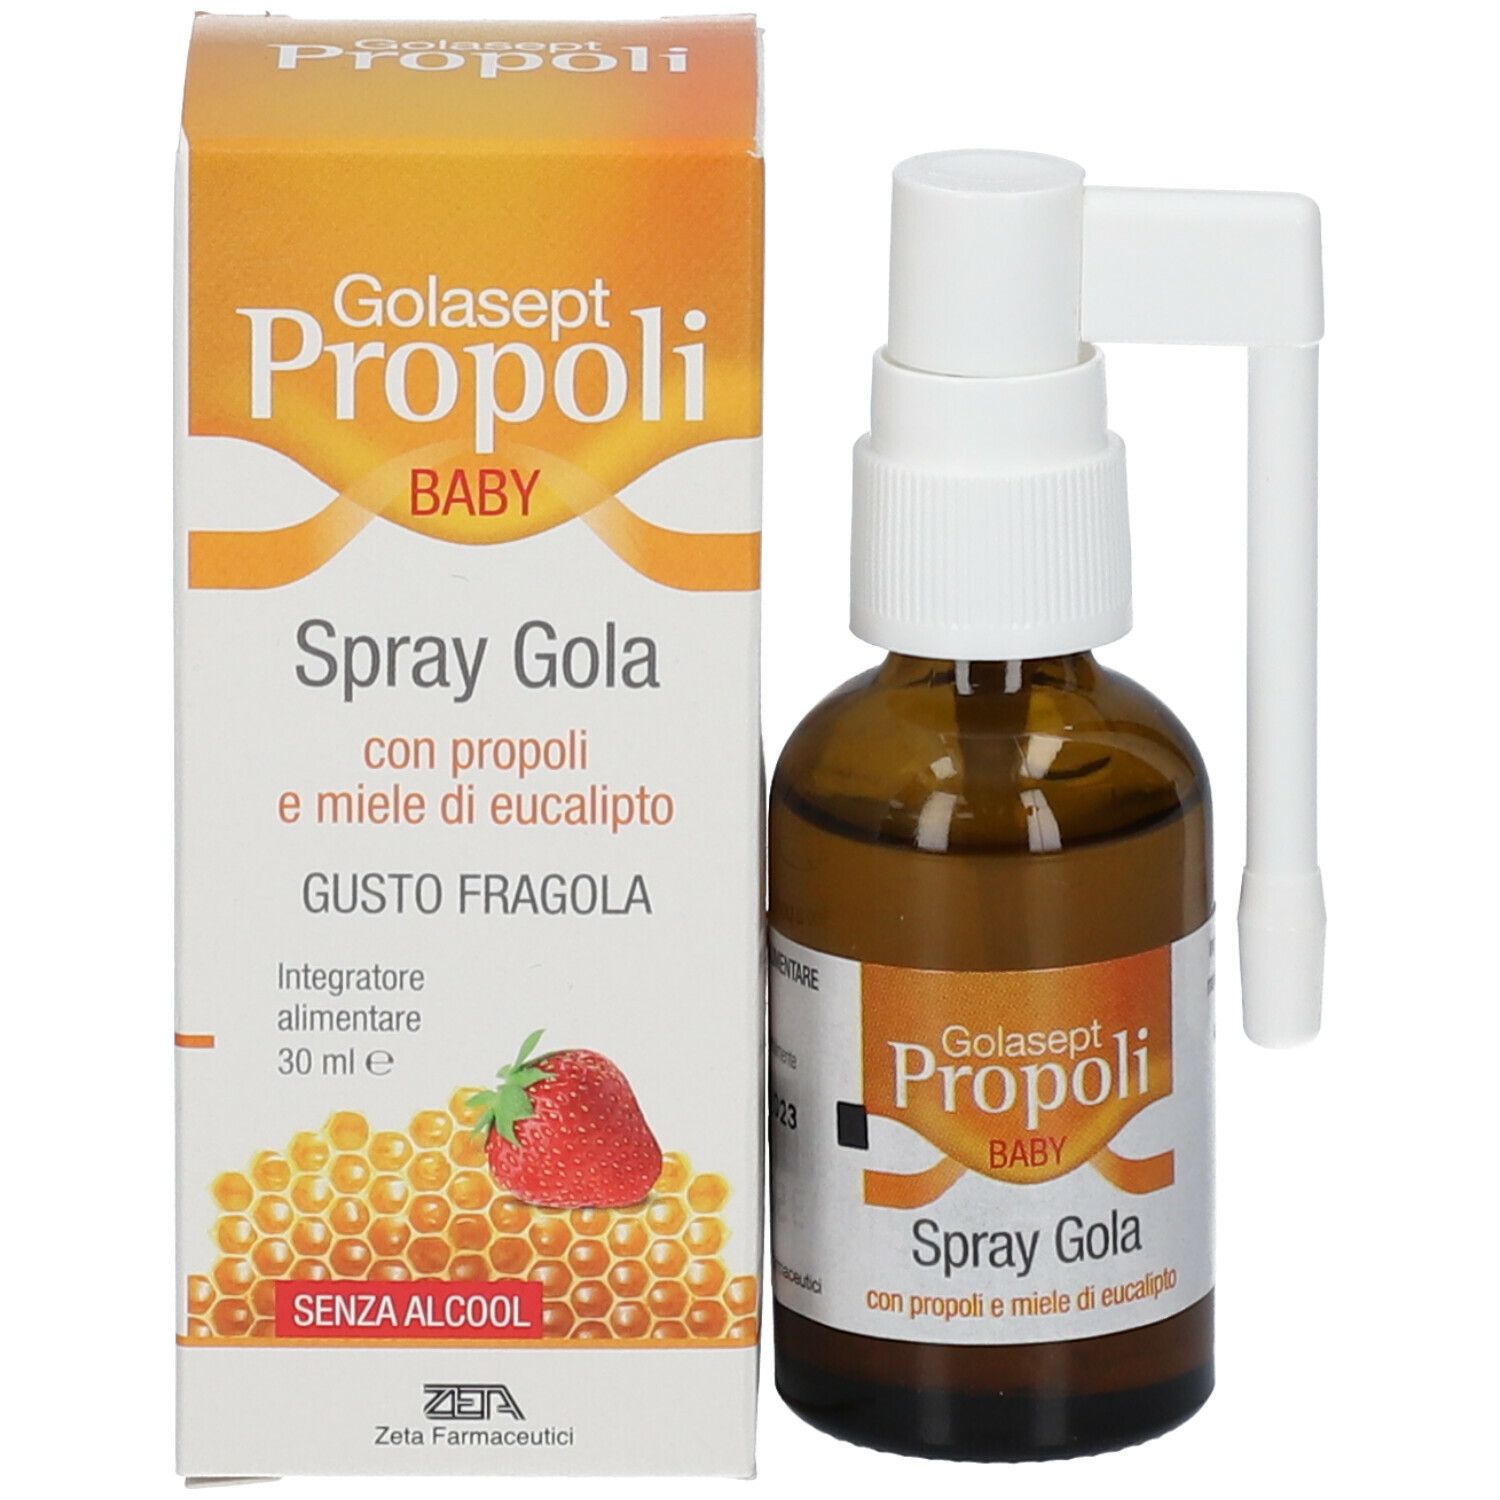 Golasept Propoli Baby Spray Gola Gusto Fragola